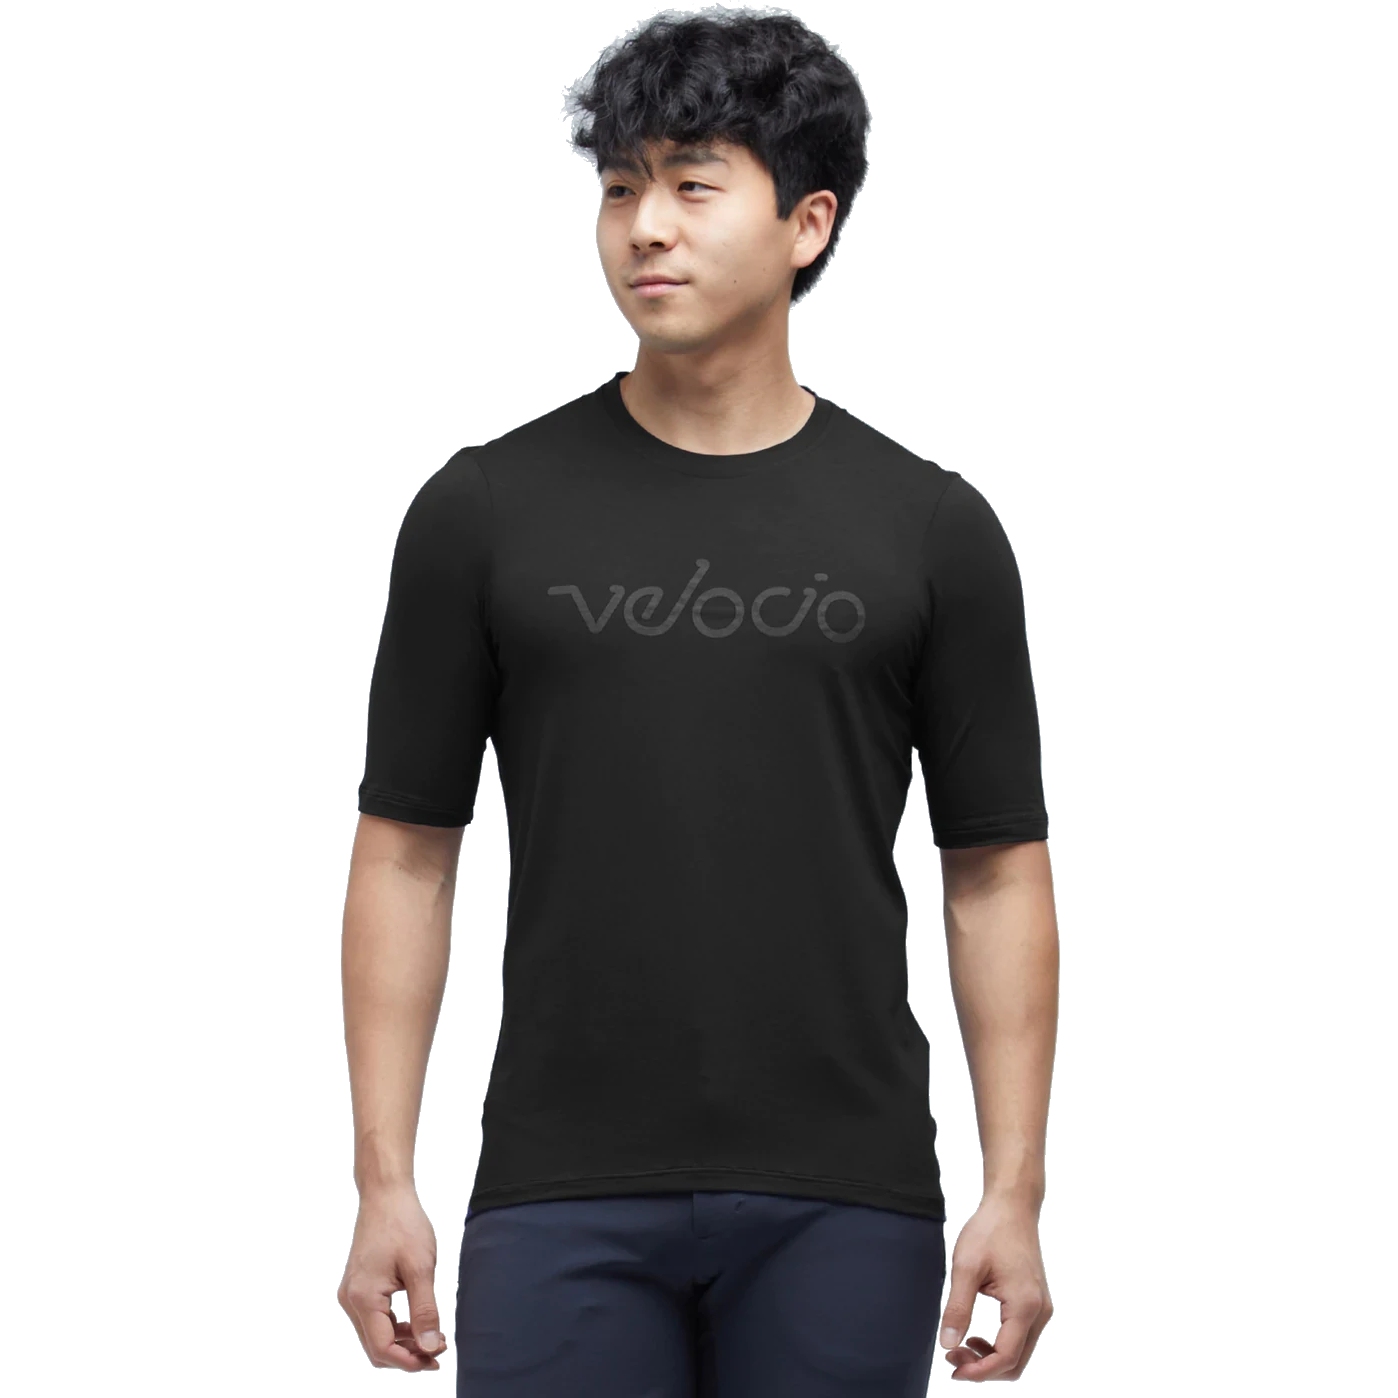 Foto de Velocio Camiseta Hombre - Modal - Charcoal